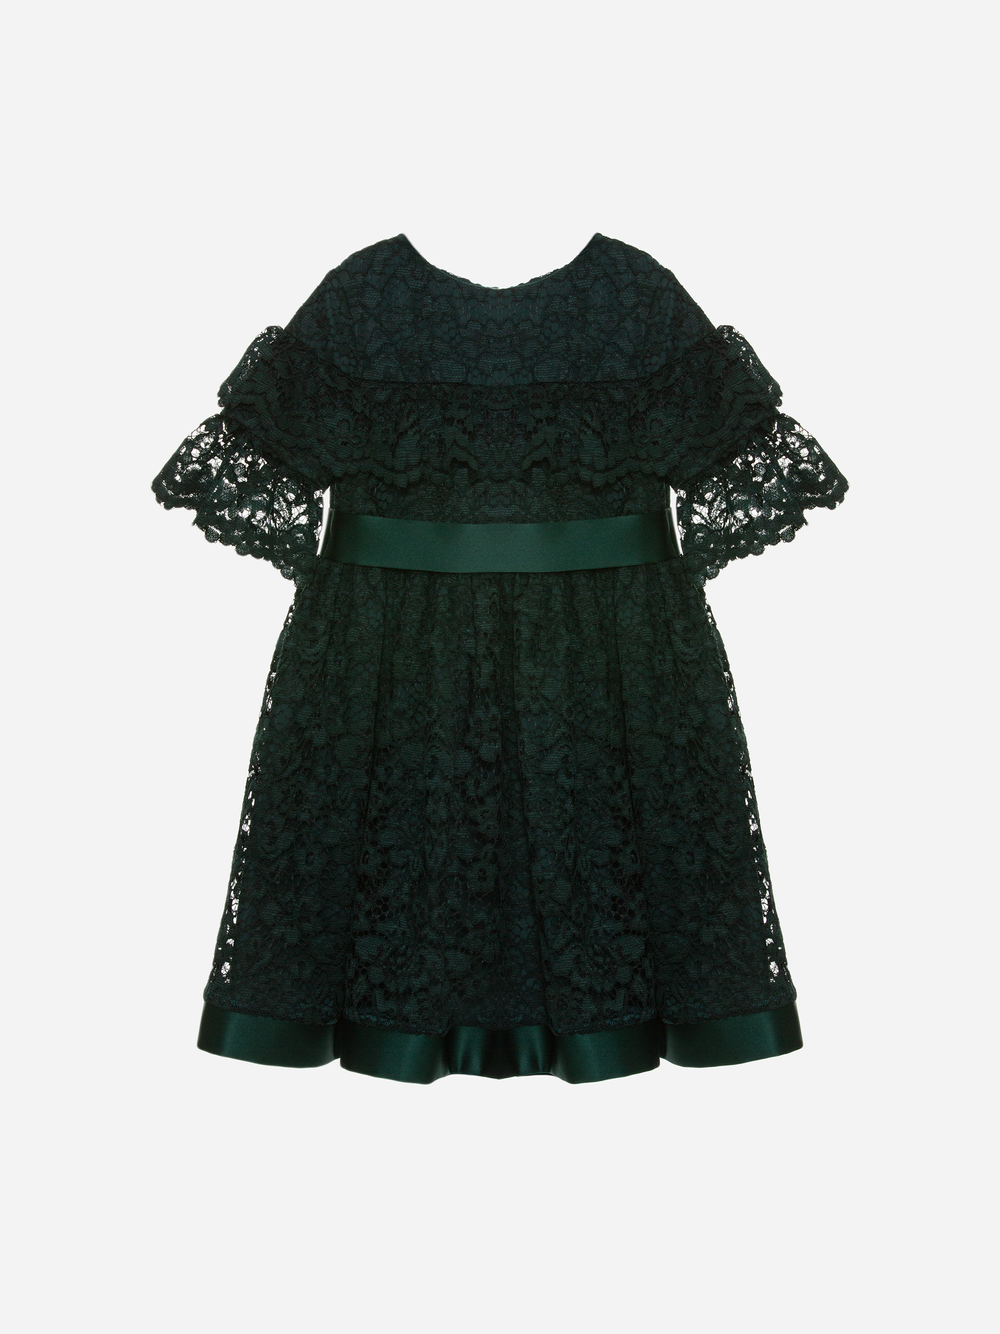 Patachou Dark Green lace dress